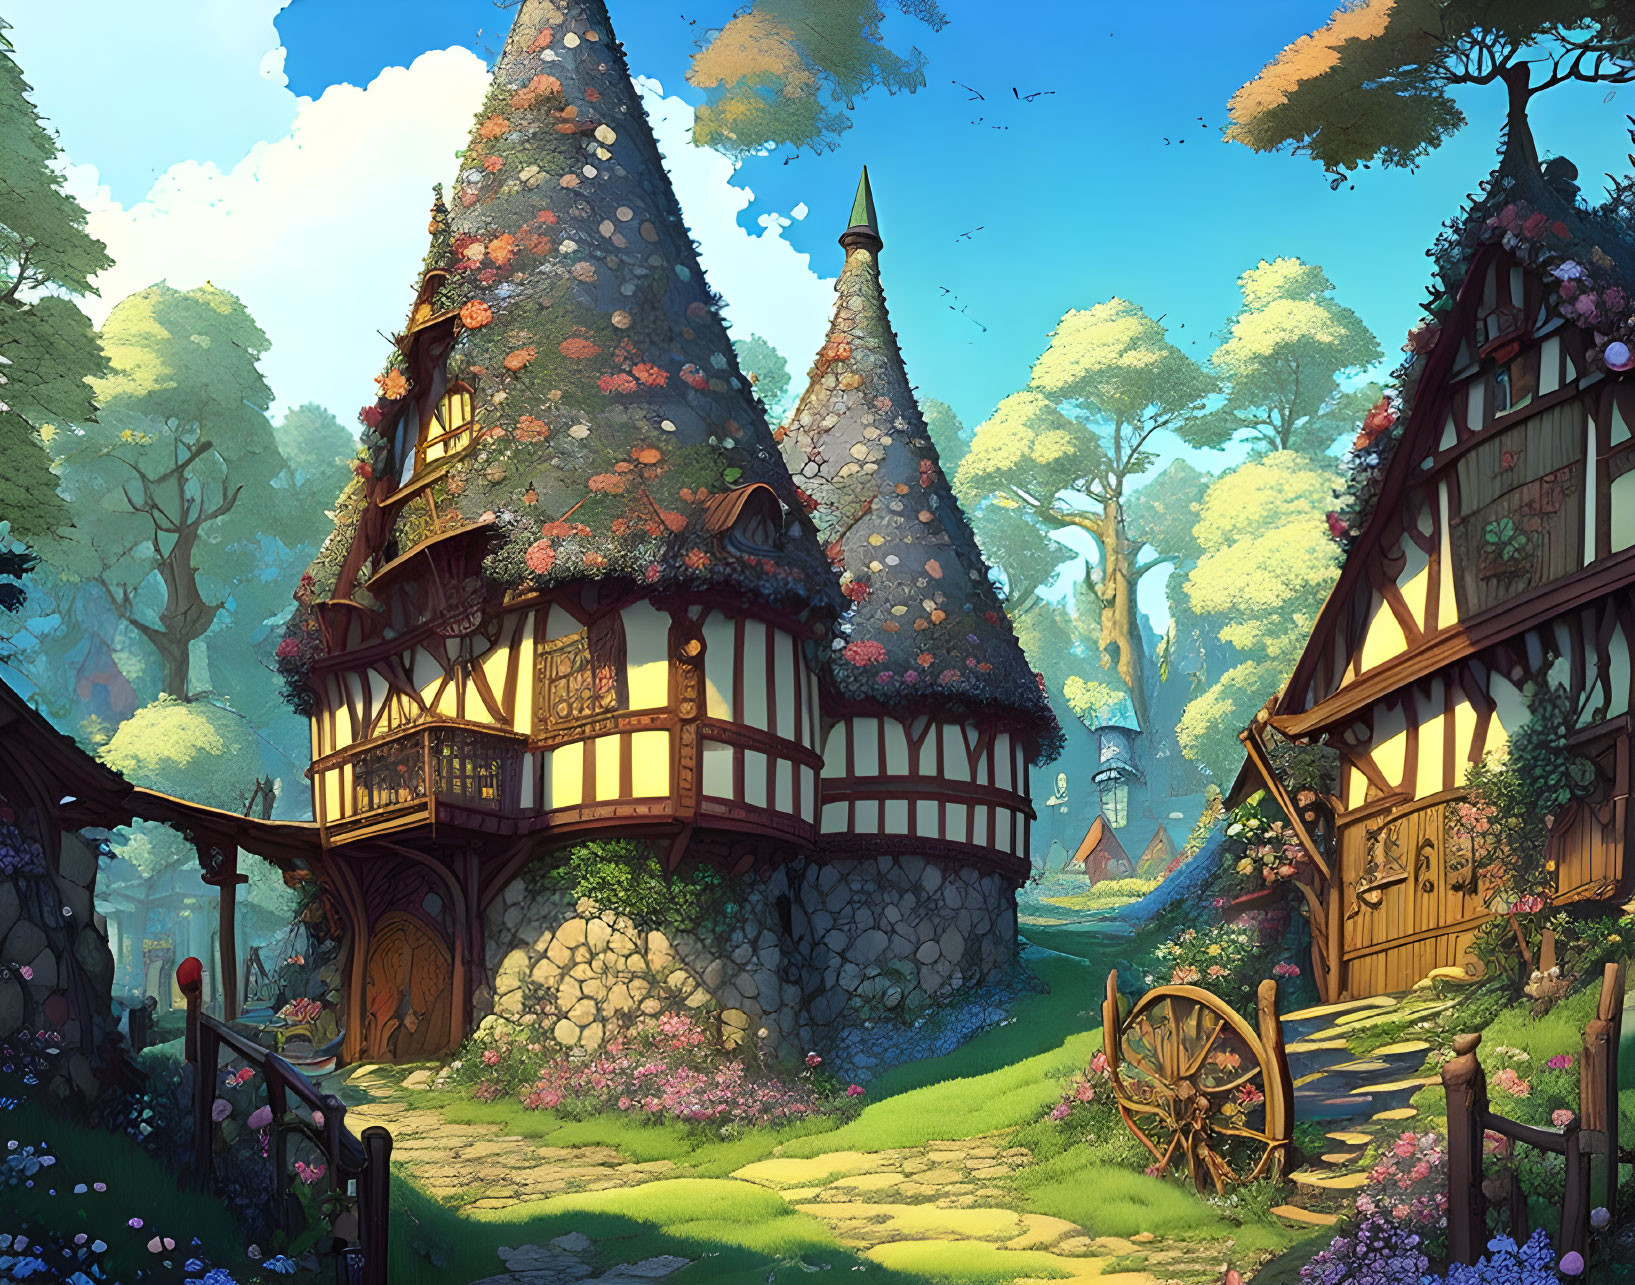 Fairy tale village 